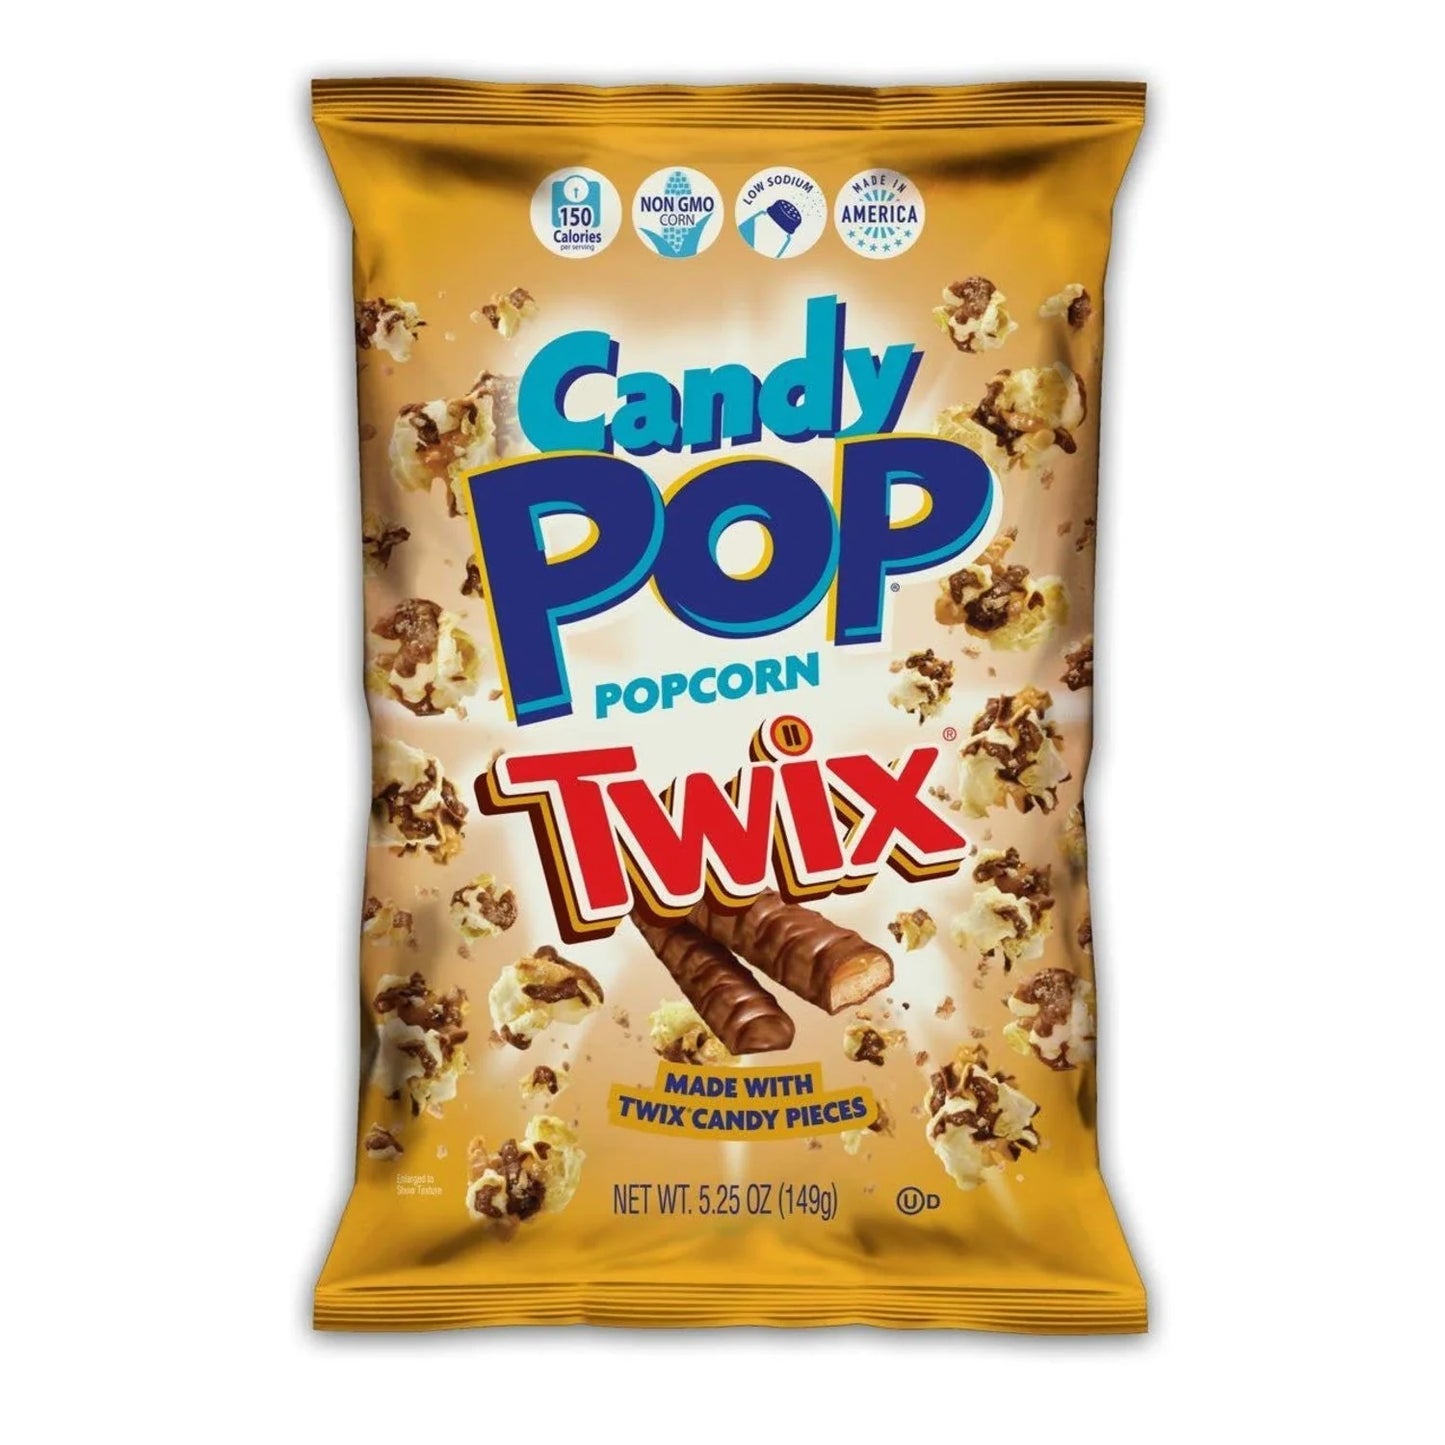 Candy Pop Twix Popcorn, 149g